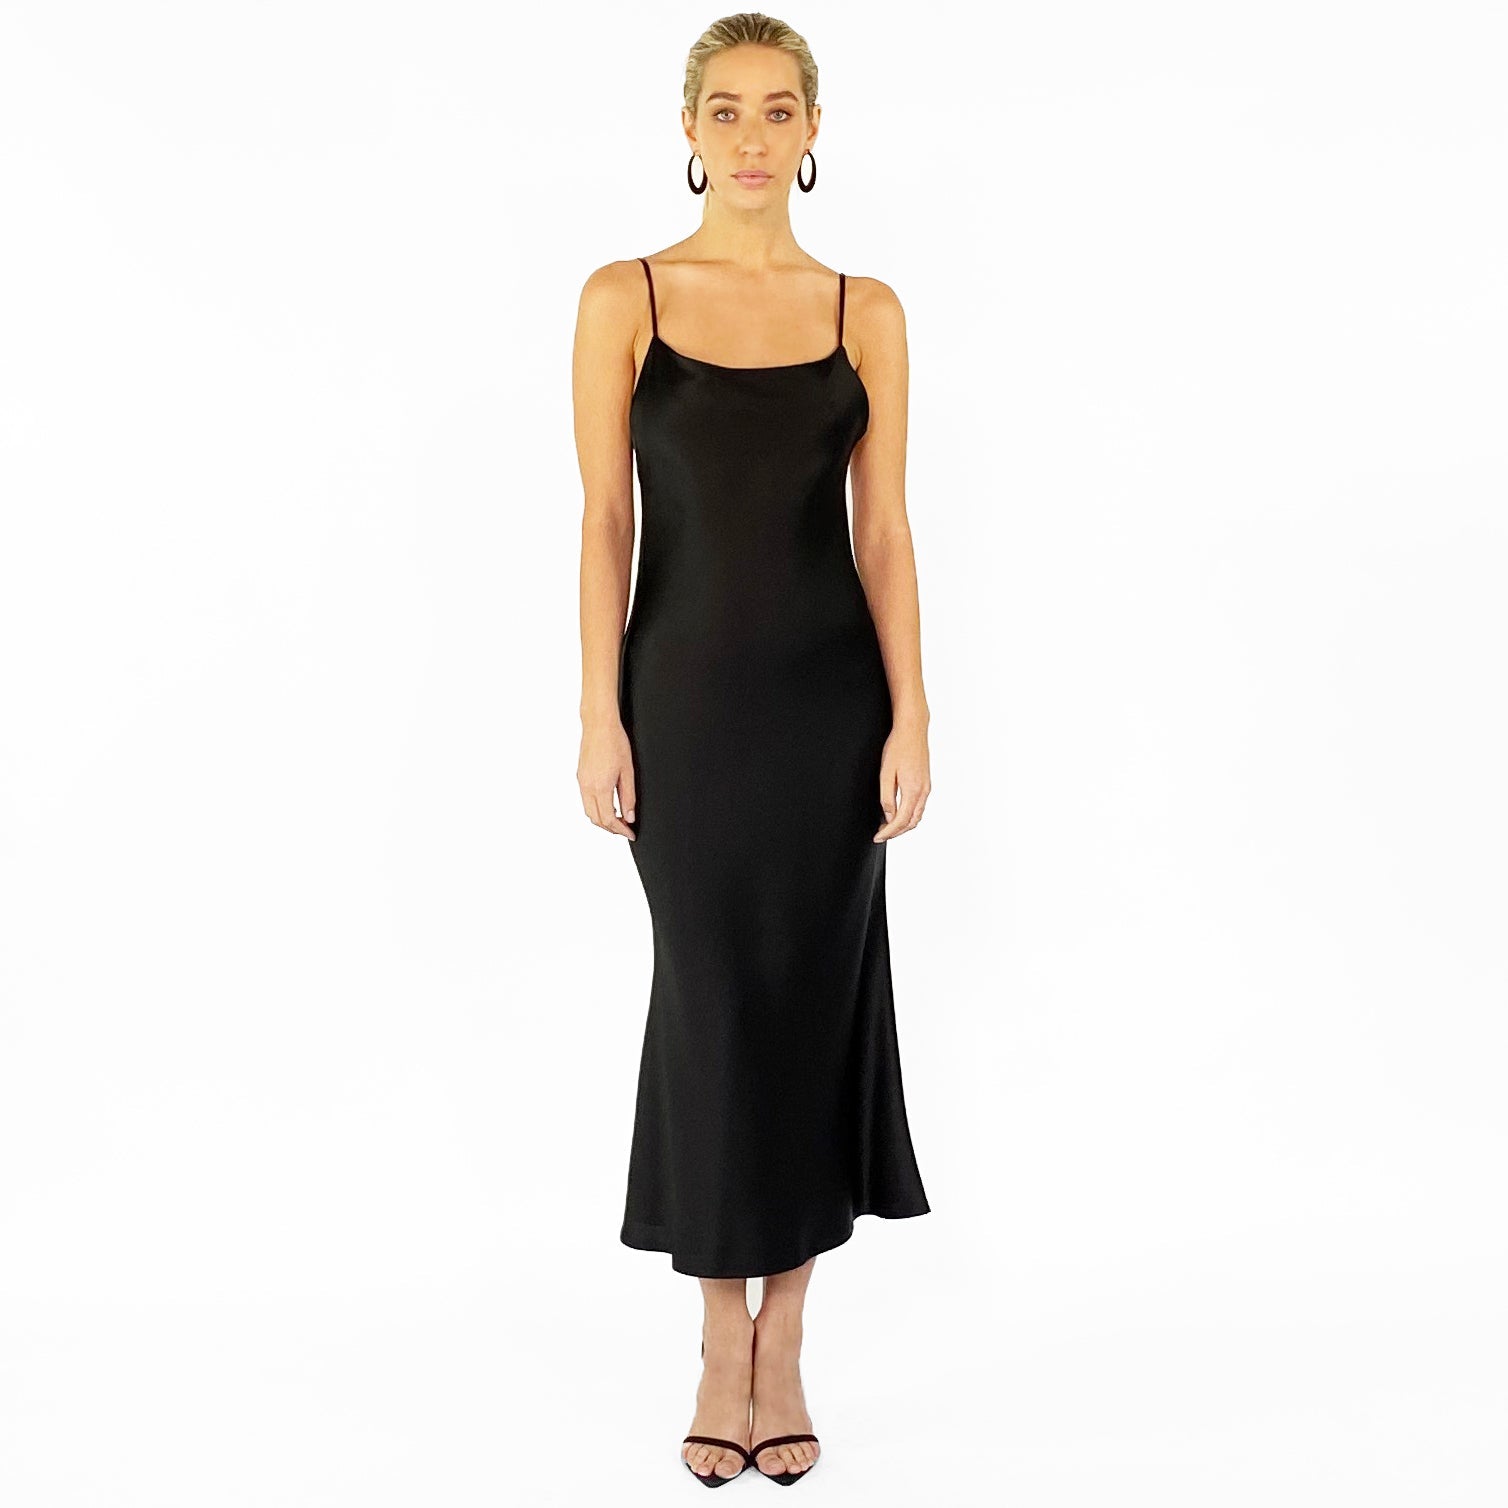 The Madysyn Backless Slip Dress - Sample Sale